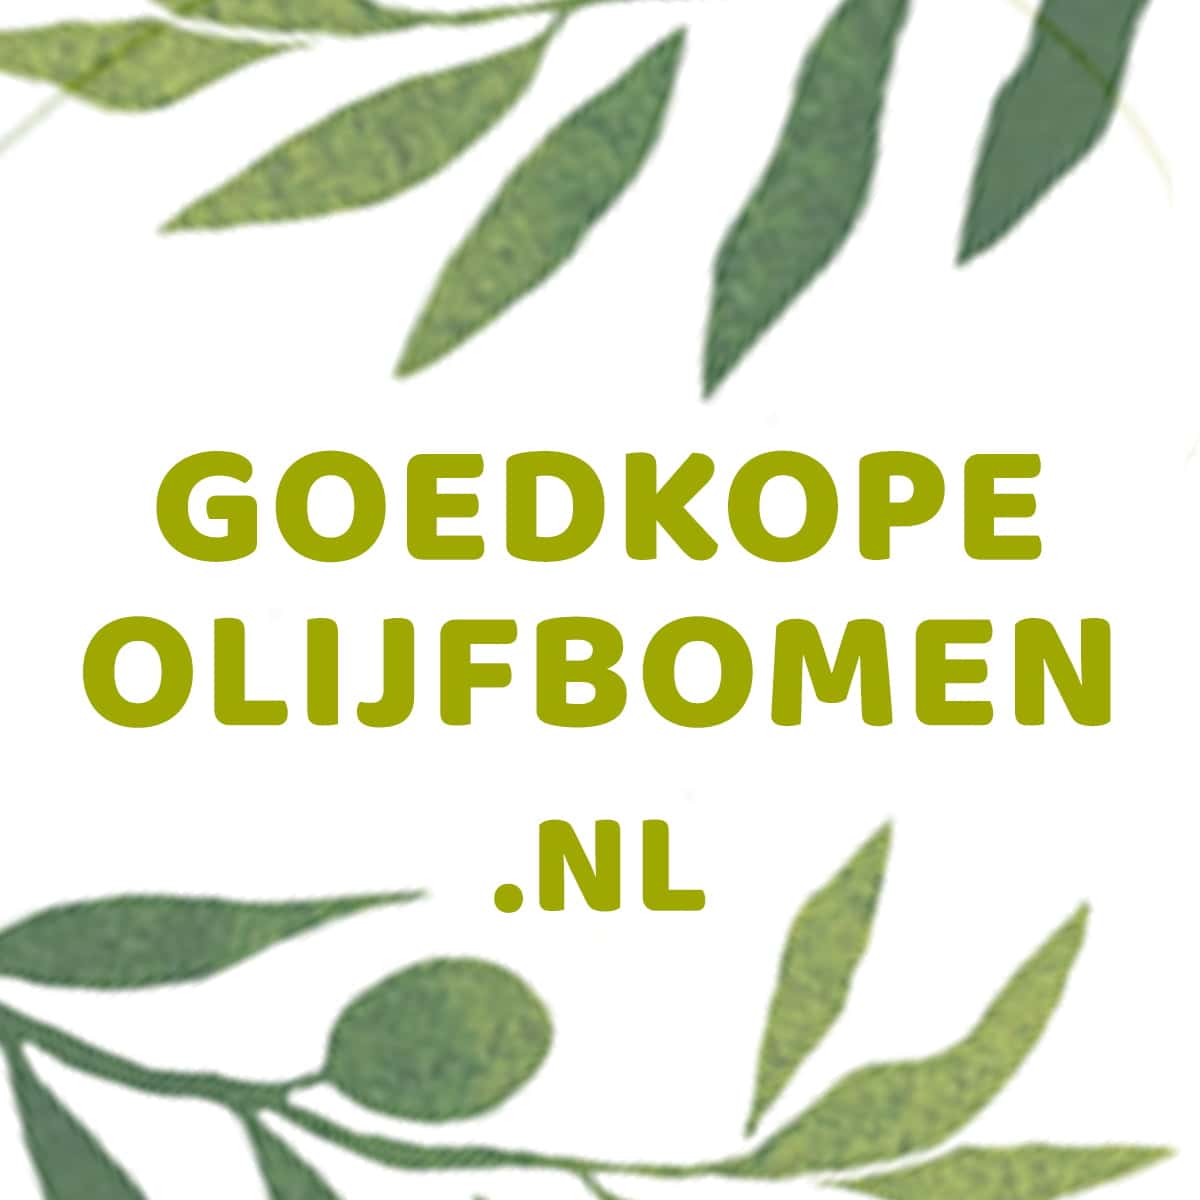 Goedkopeolijfbomen.nl